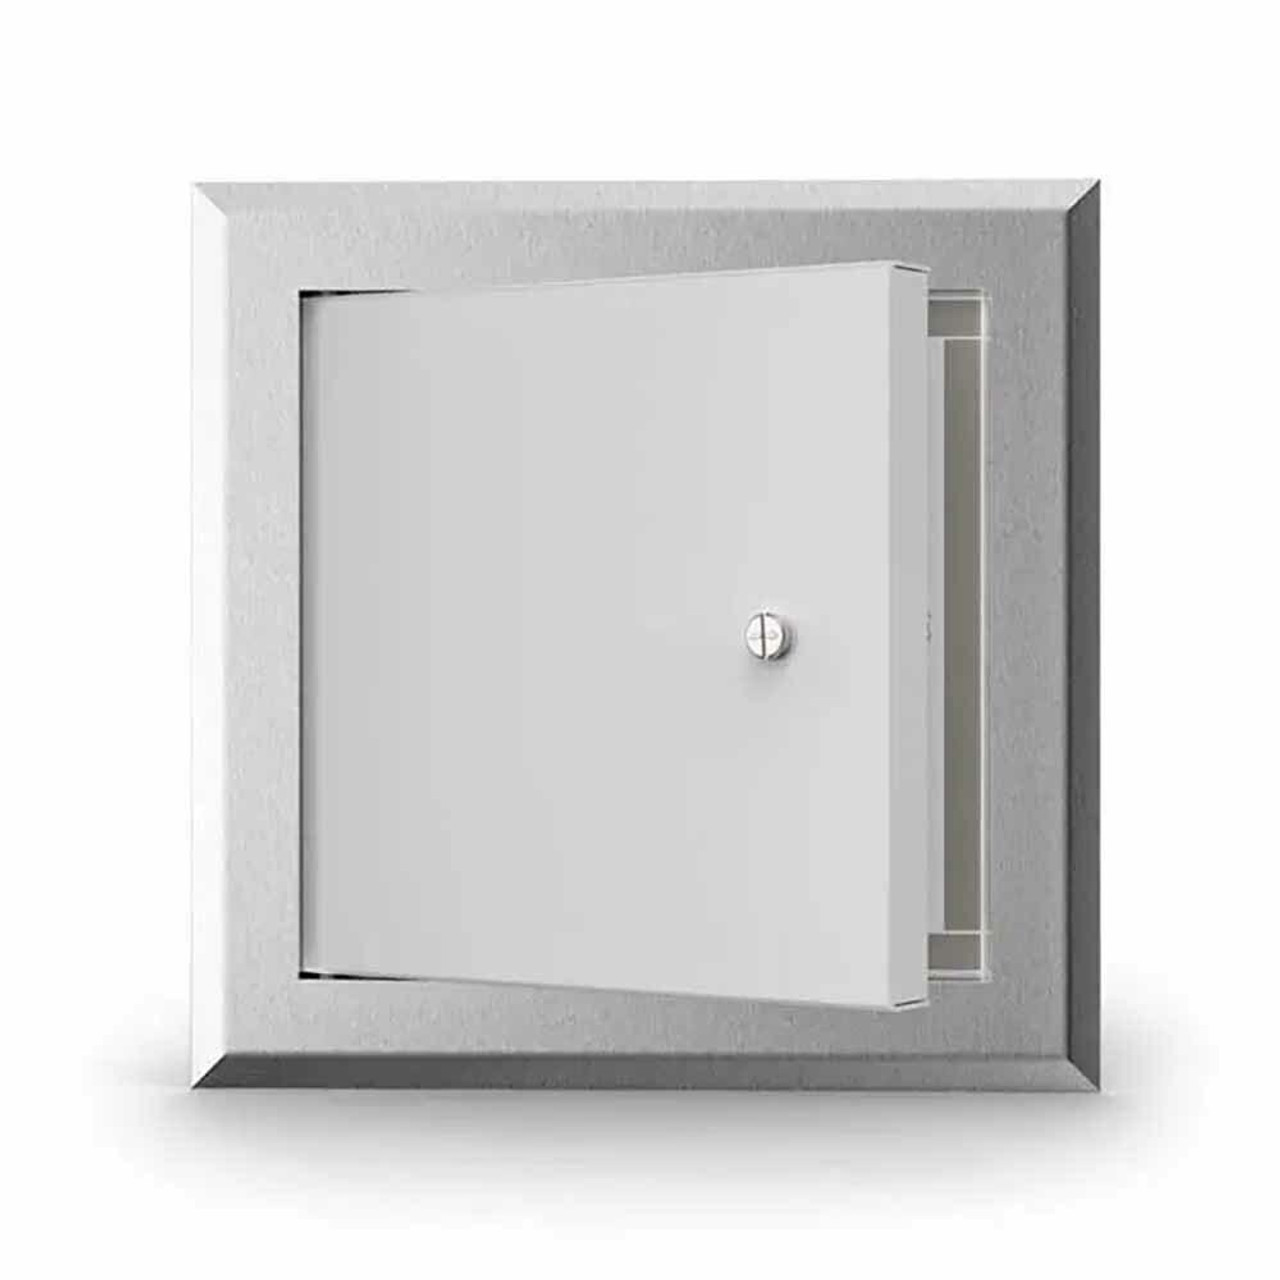 Aluminum Access Panel Door Sheet metal Modified Late Model Dirt 6 x 6 6 x 6 